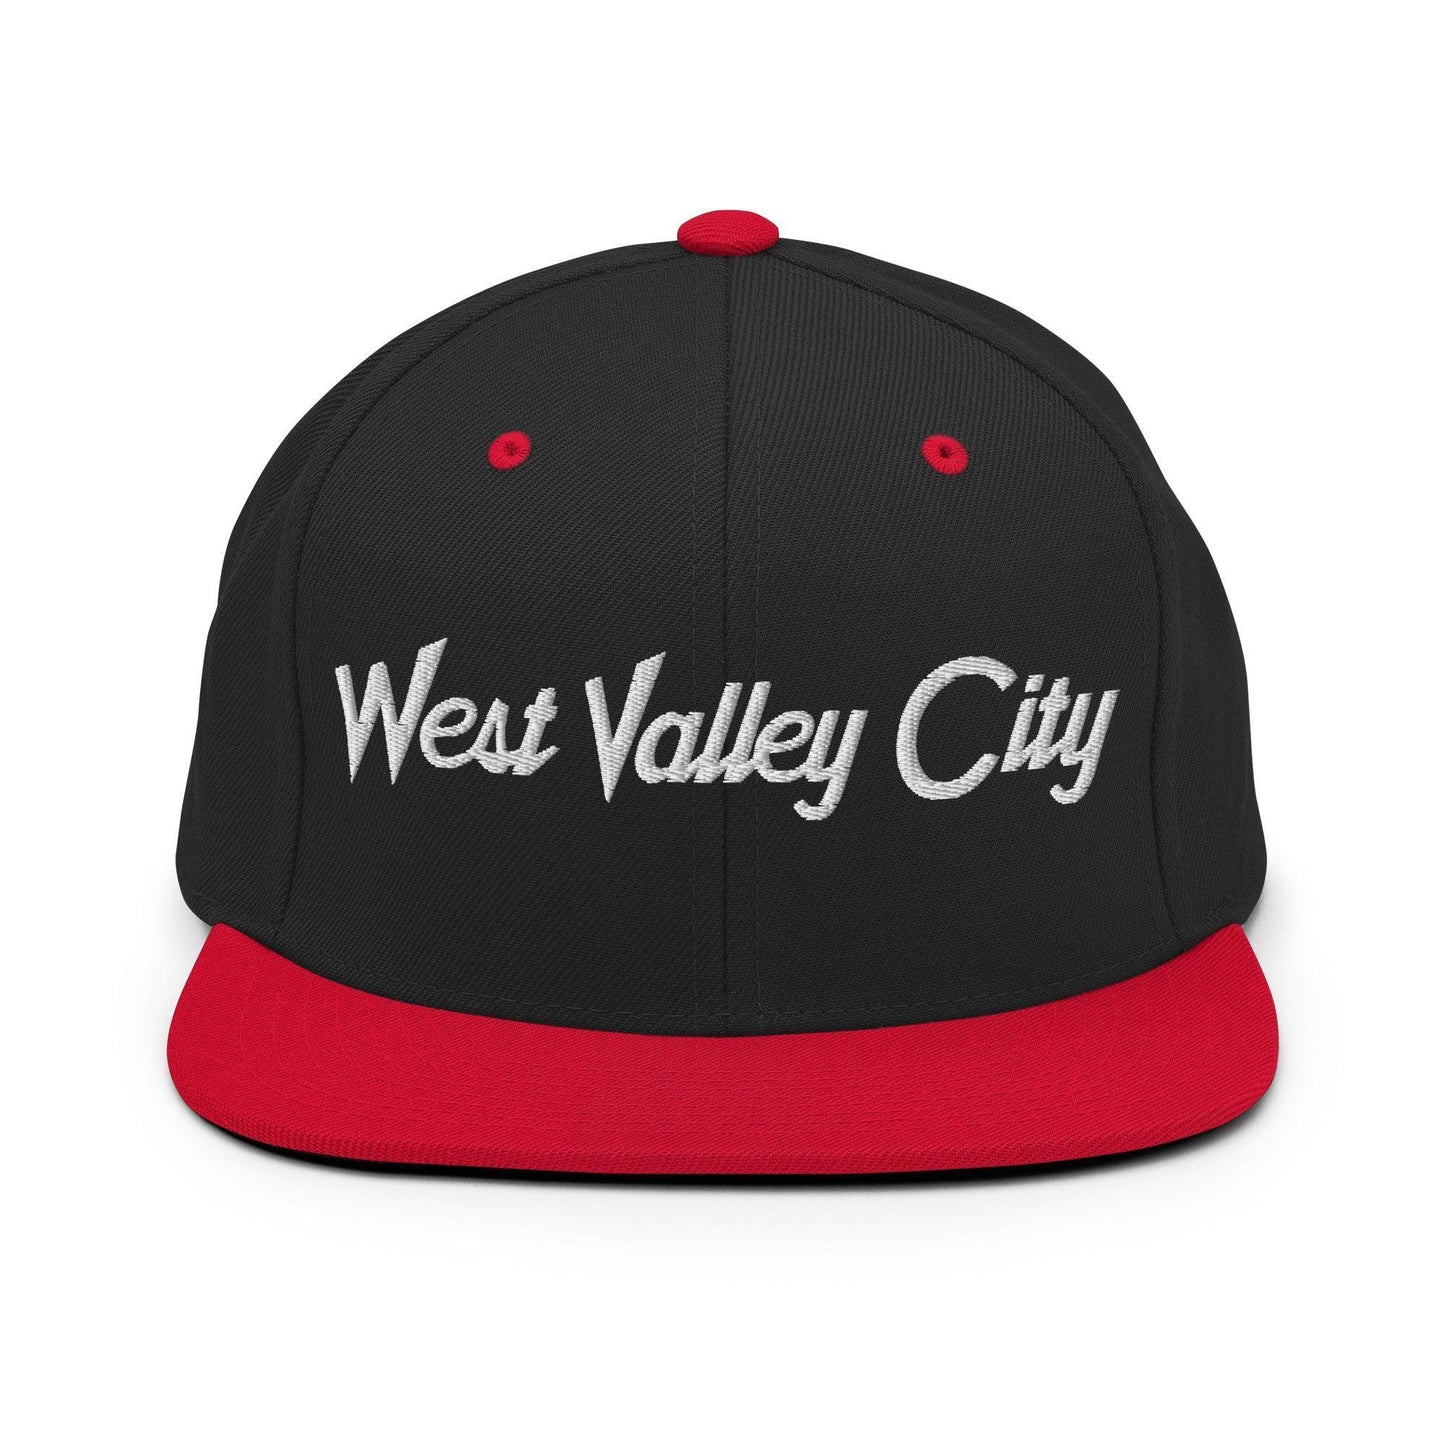 West Valley City Script Snapback Hat Black Red